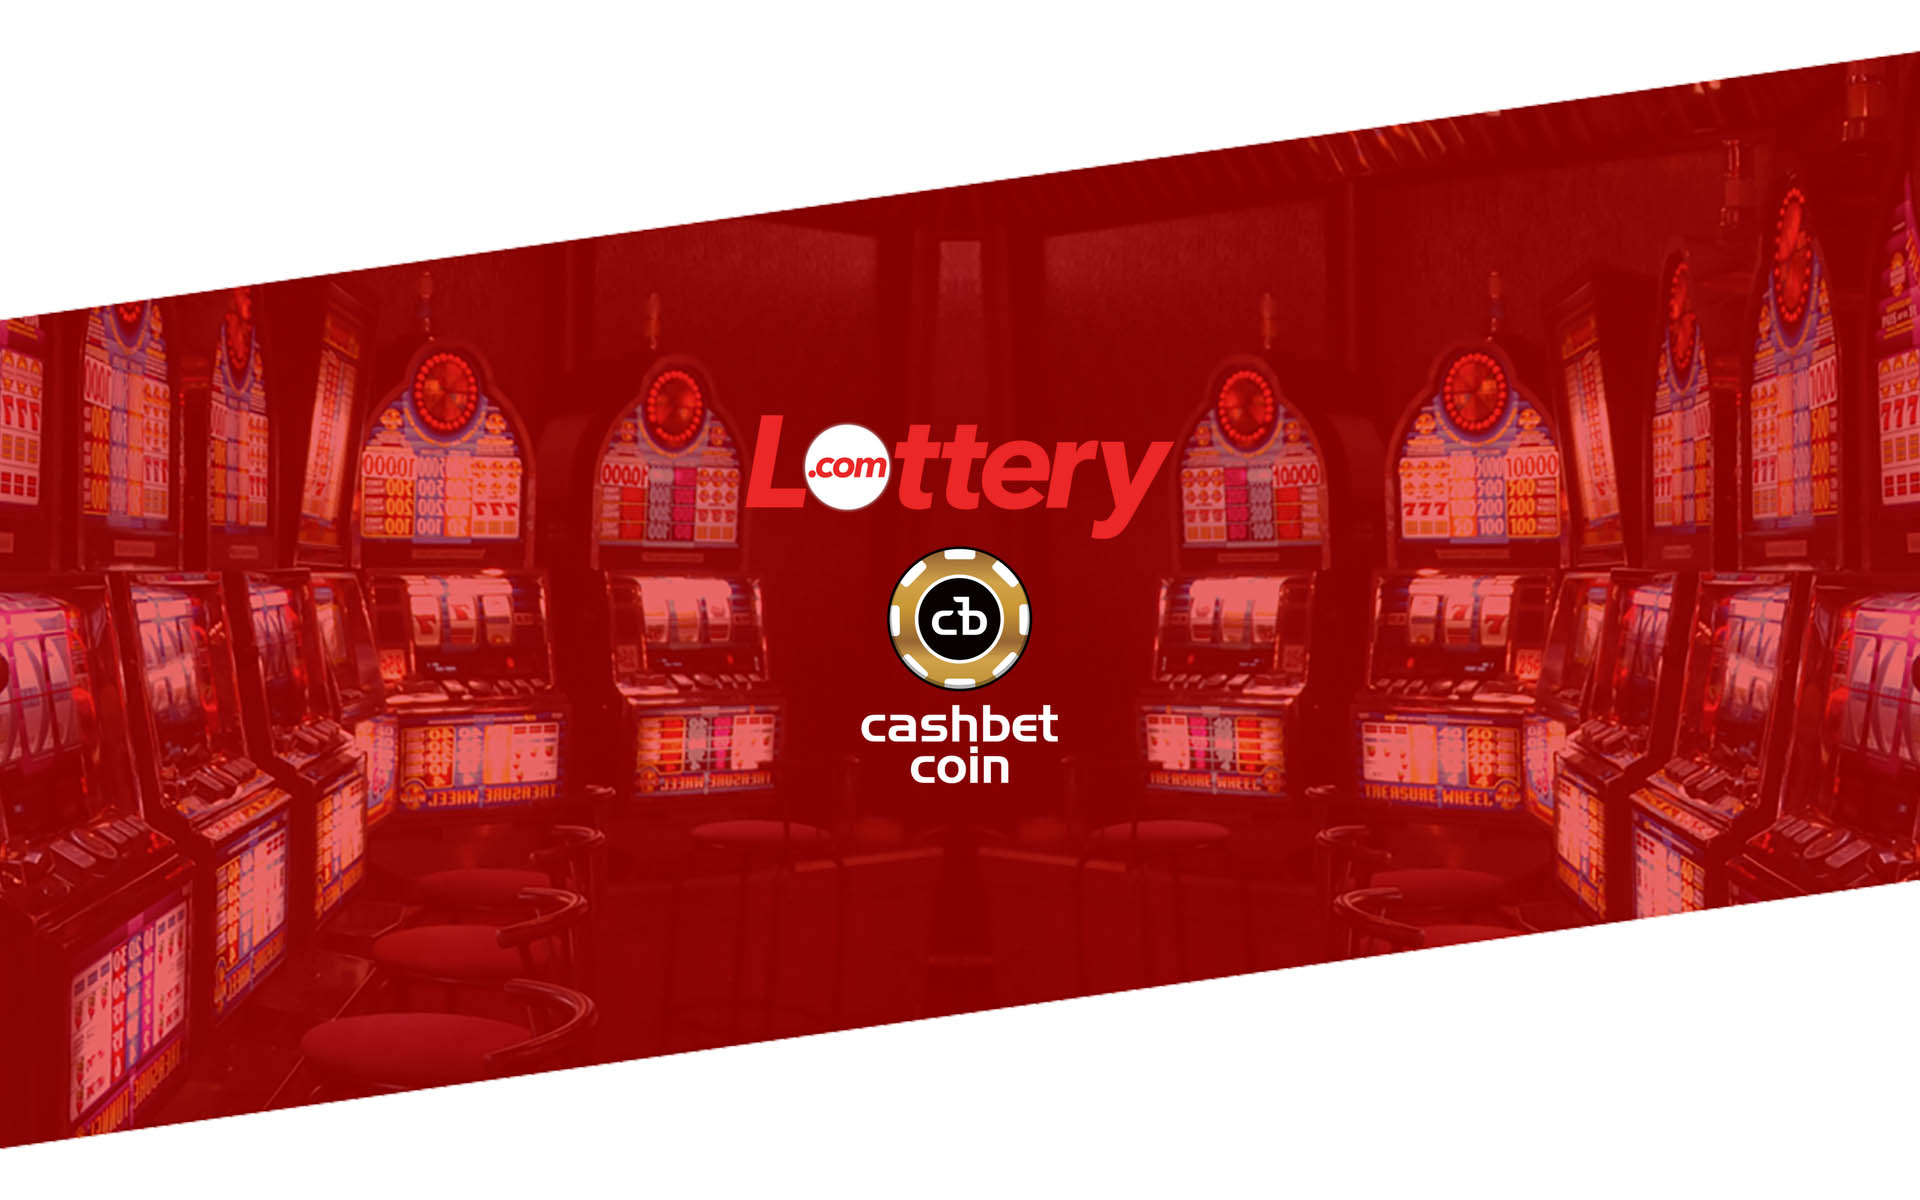 Lottery.com Partners with CashBet to Power Multibillion Dollar Social Impact Raffles